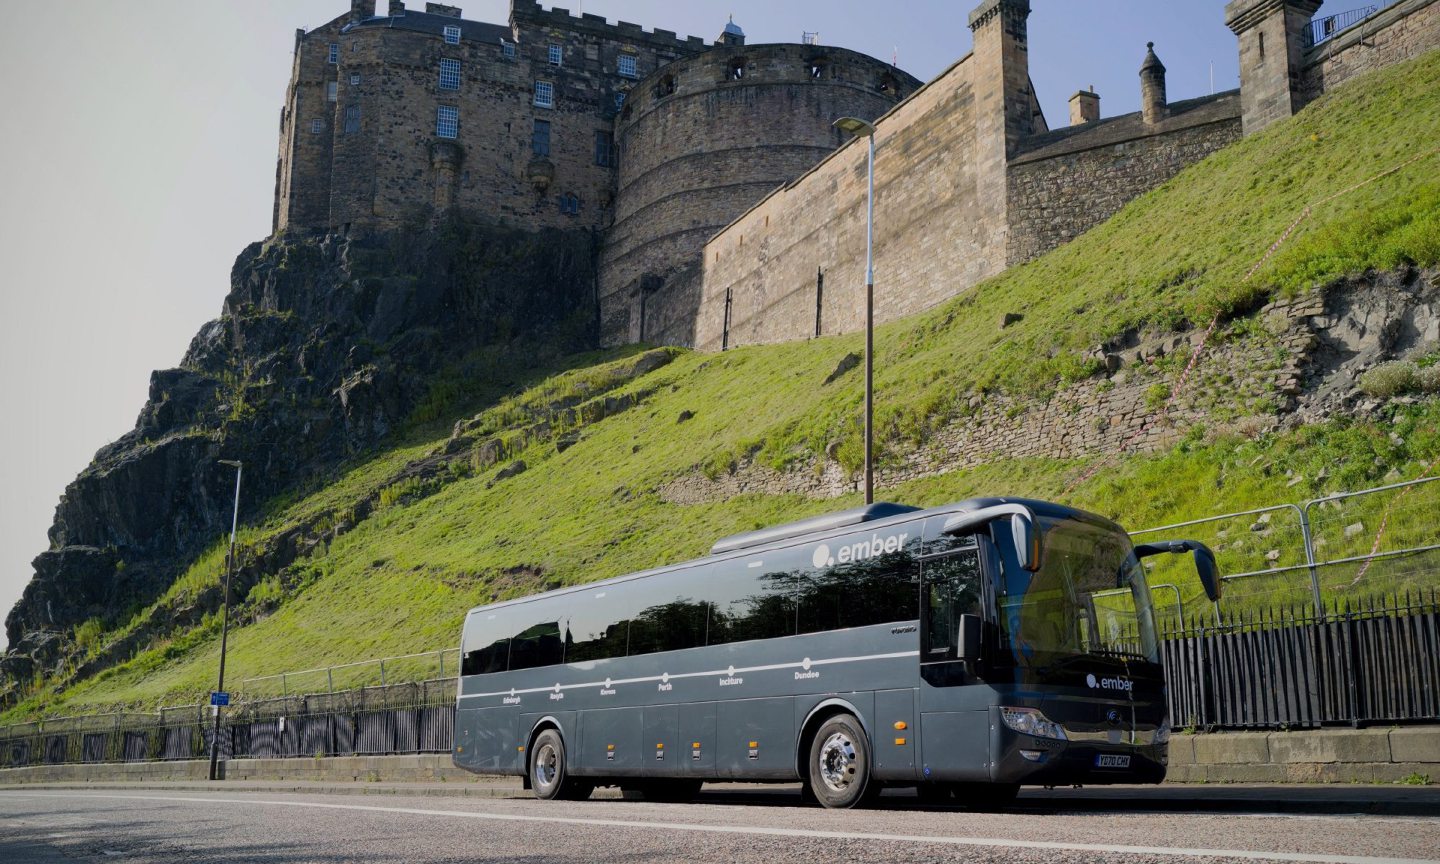 An Ember bus in Edinburgh